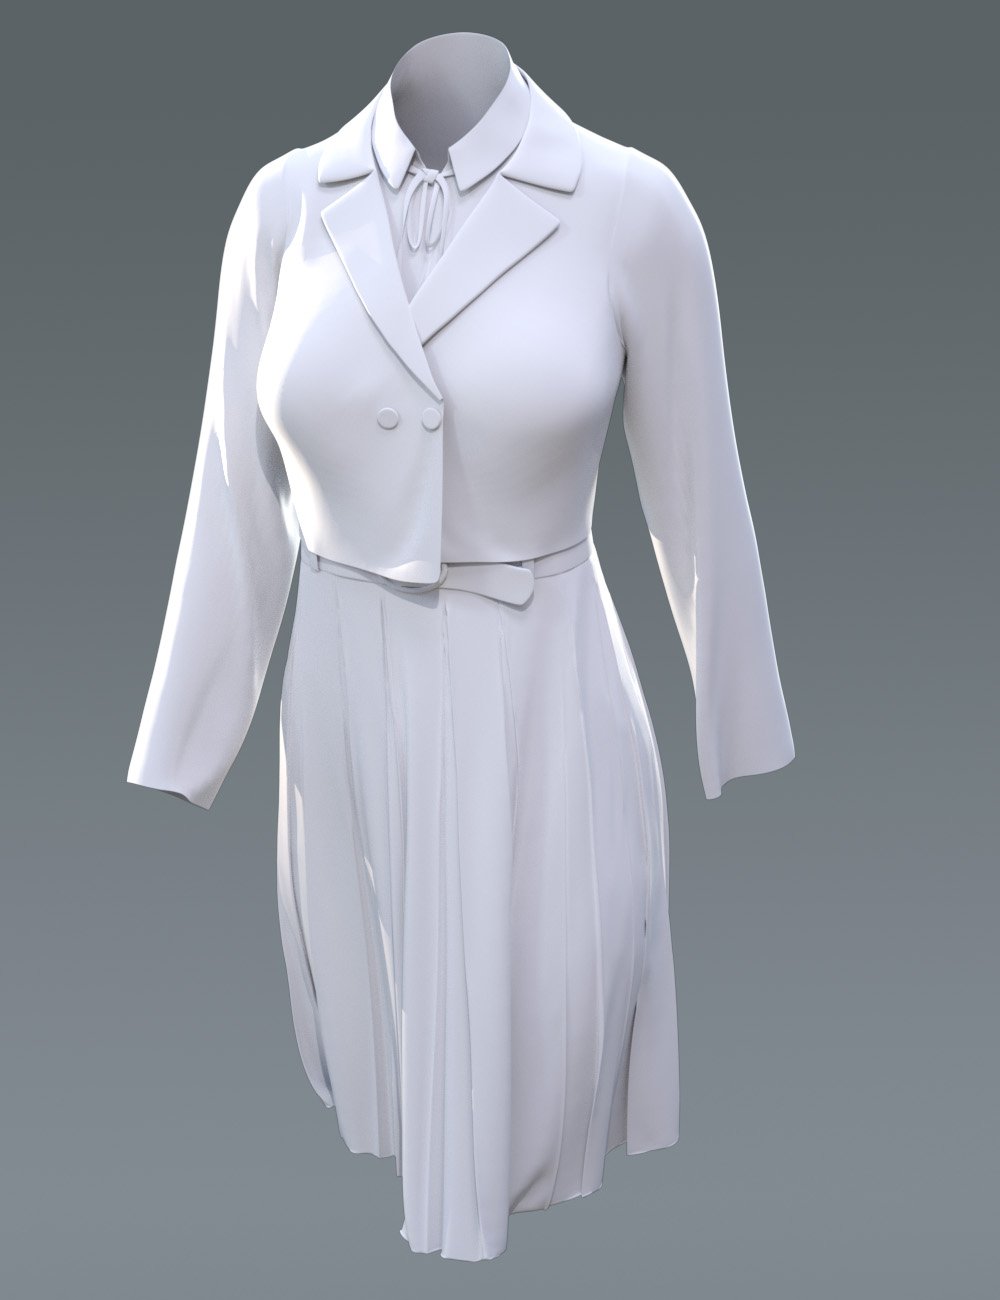 dForce Dream High School Uniform for Genesis 8 and 8.1 Females by: tentman, 3D Models by Daz 3D